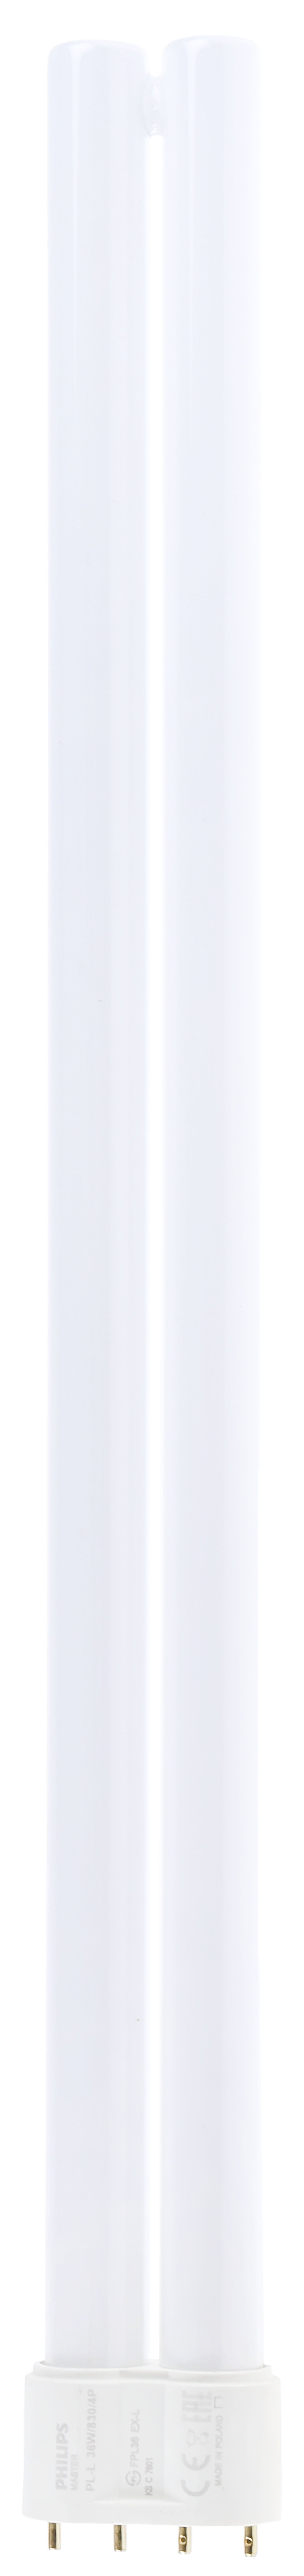 2G11 Twin Tube Shape CFL Bulb, 36 W, 3000K, Warm White Colour Tone